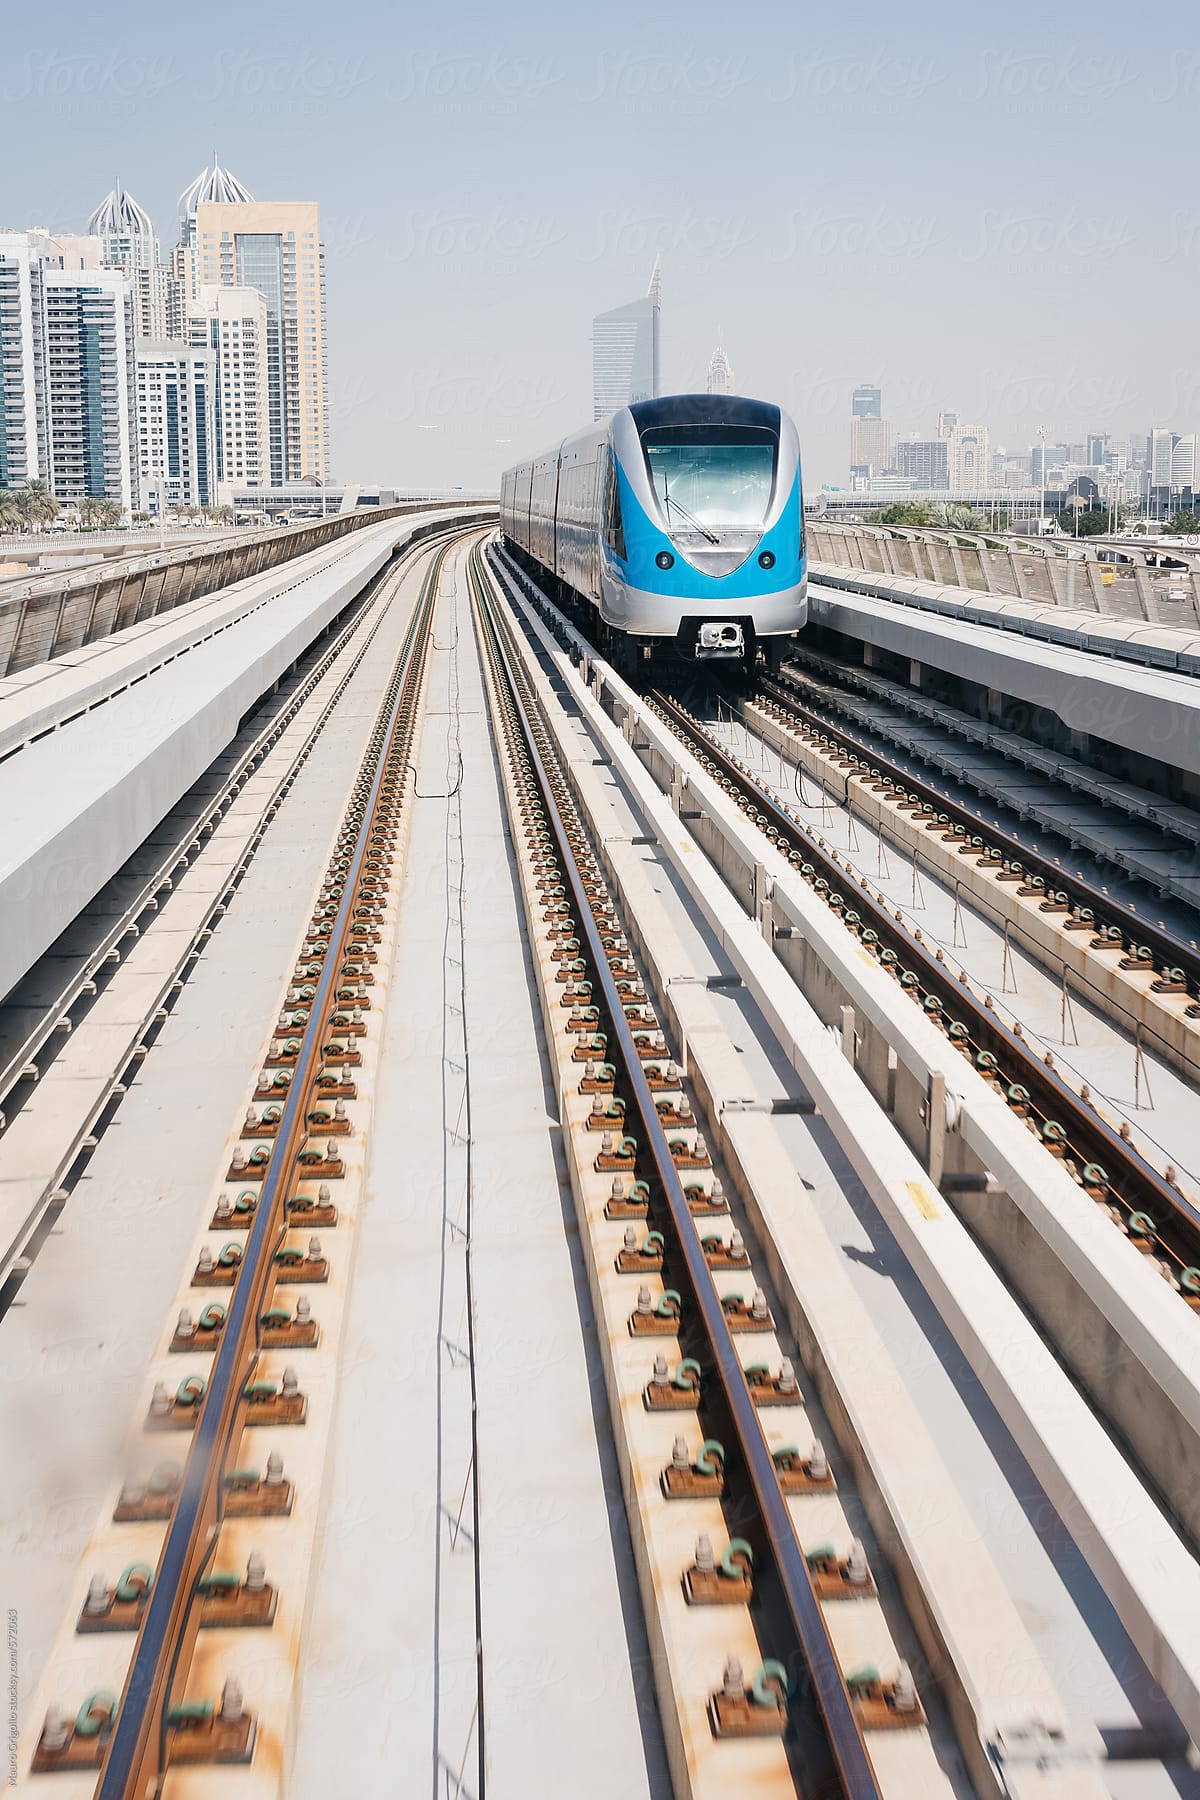 Train and city buildings view in Dubai. United Arab Emirates.